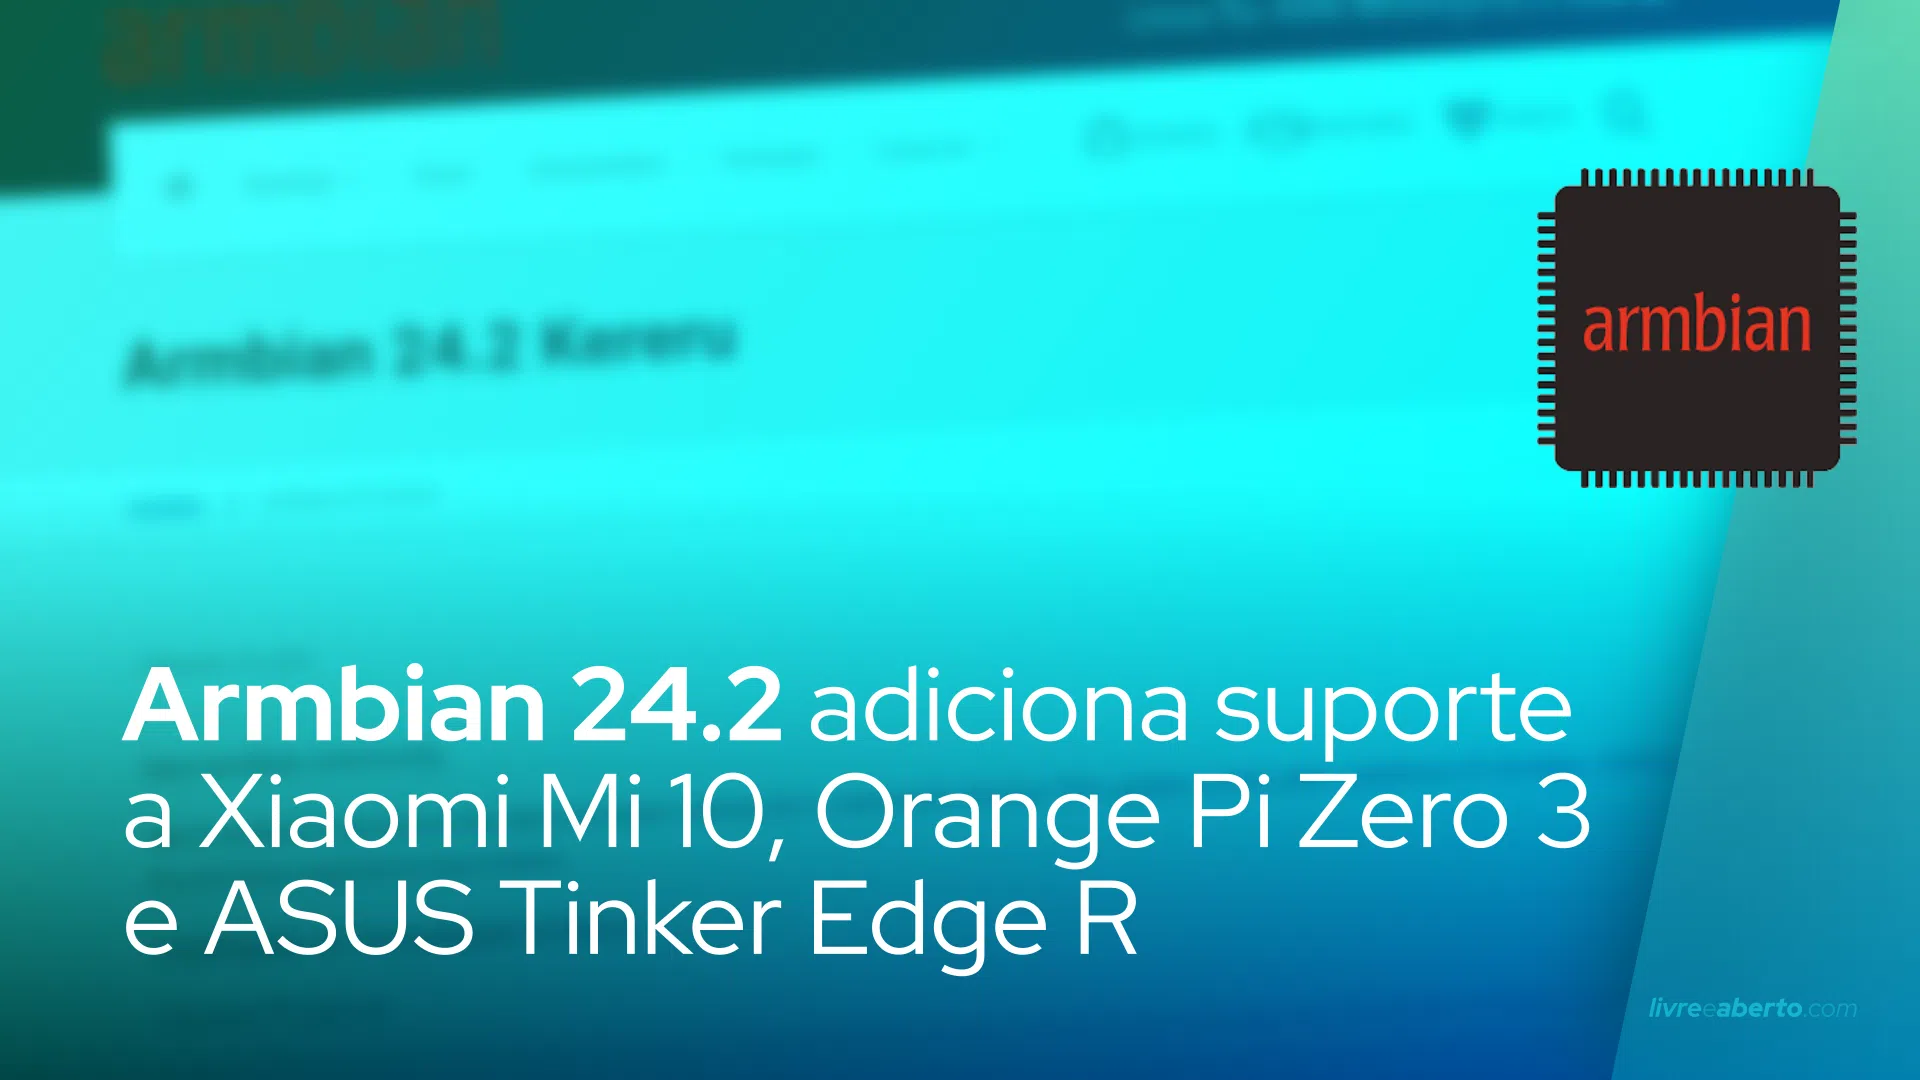 Armbian 24.2 adiciona suporte a Xiaomi Mi 10, Orange Pi Zero 3 e ASUS Tinker Edge R